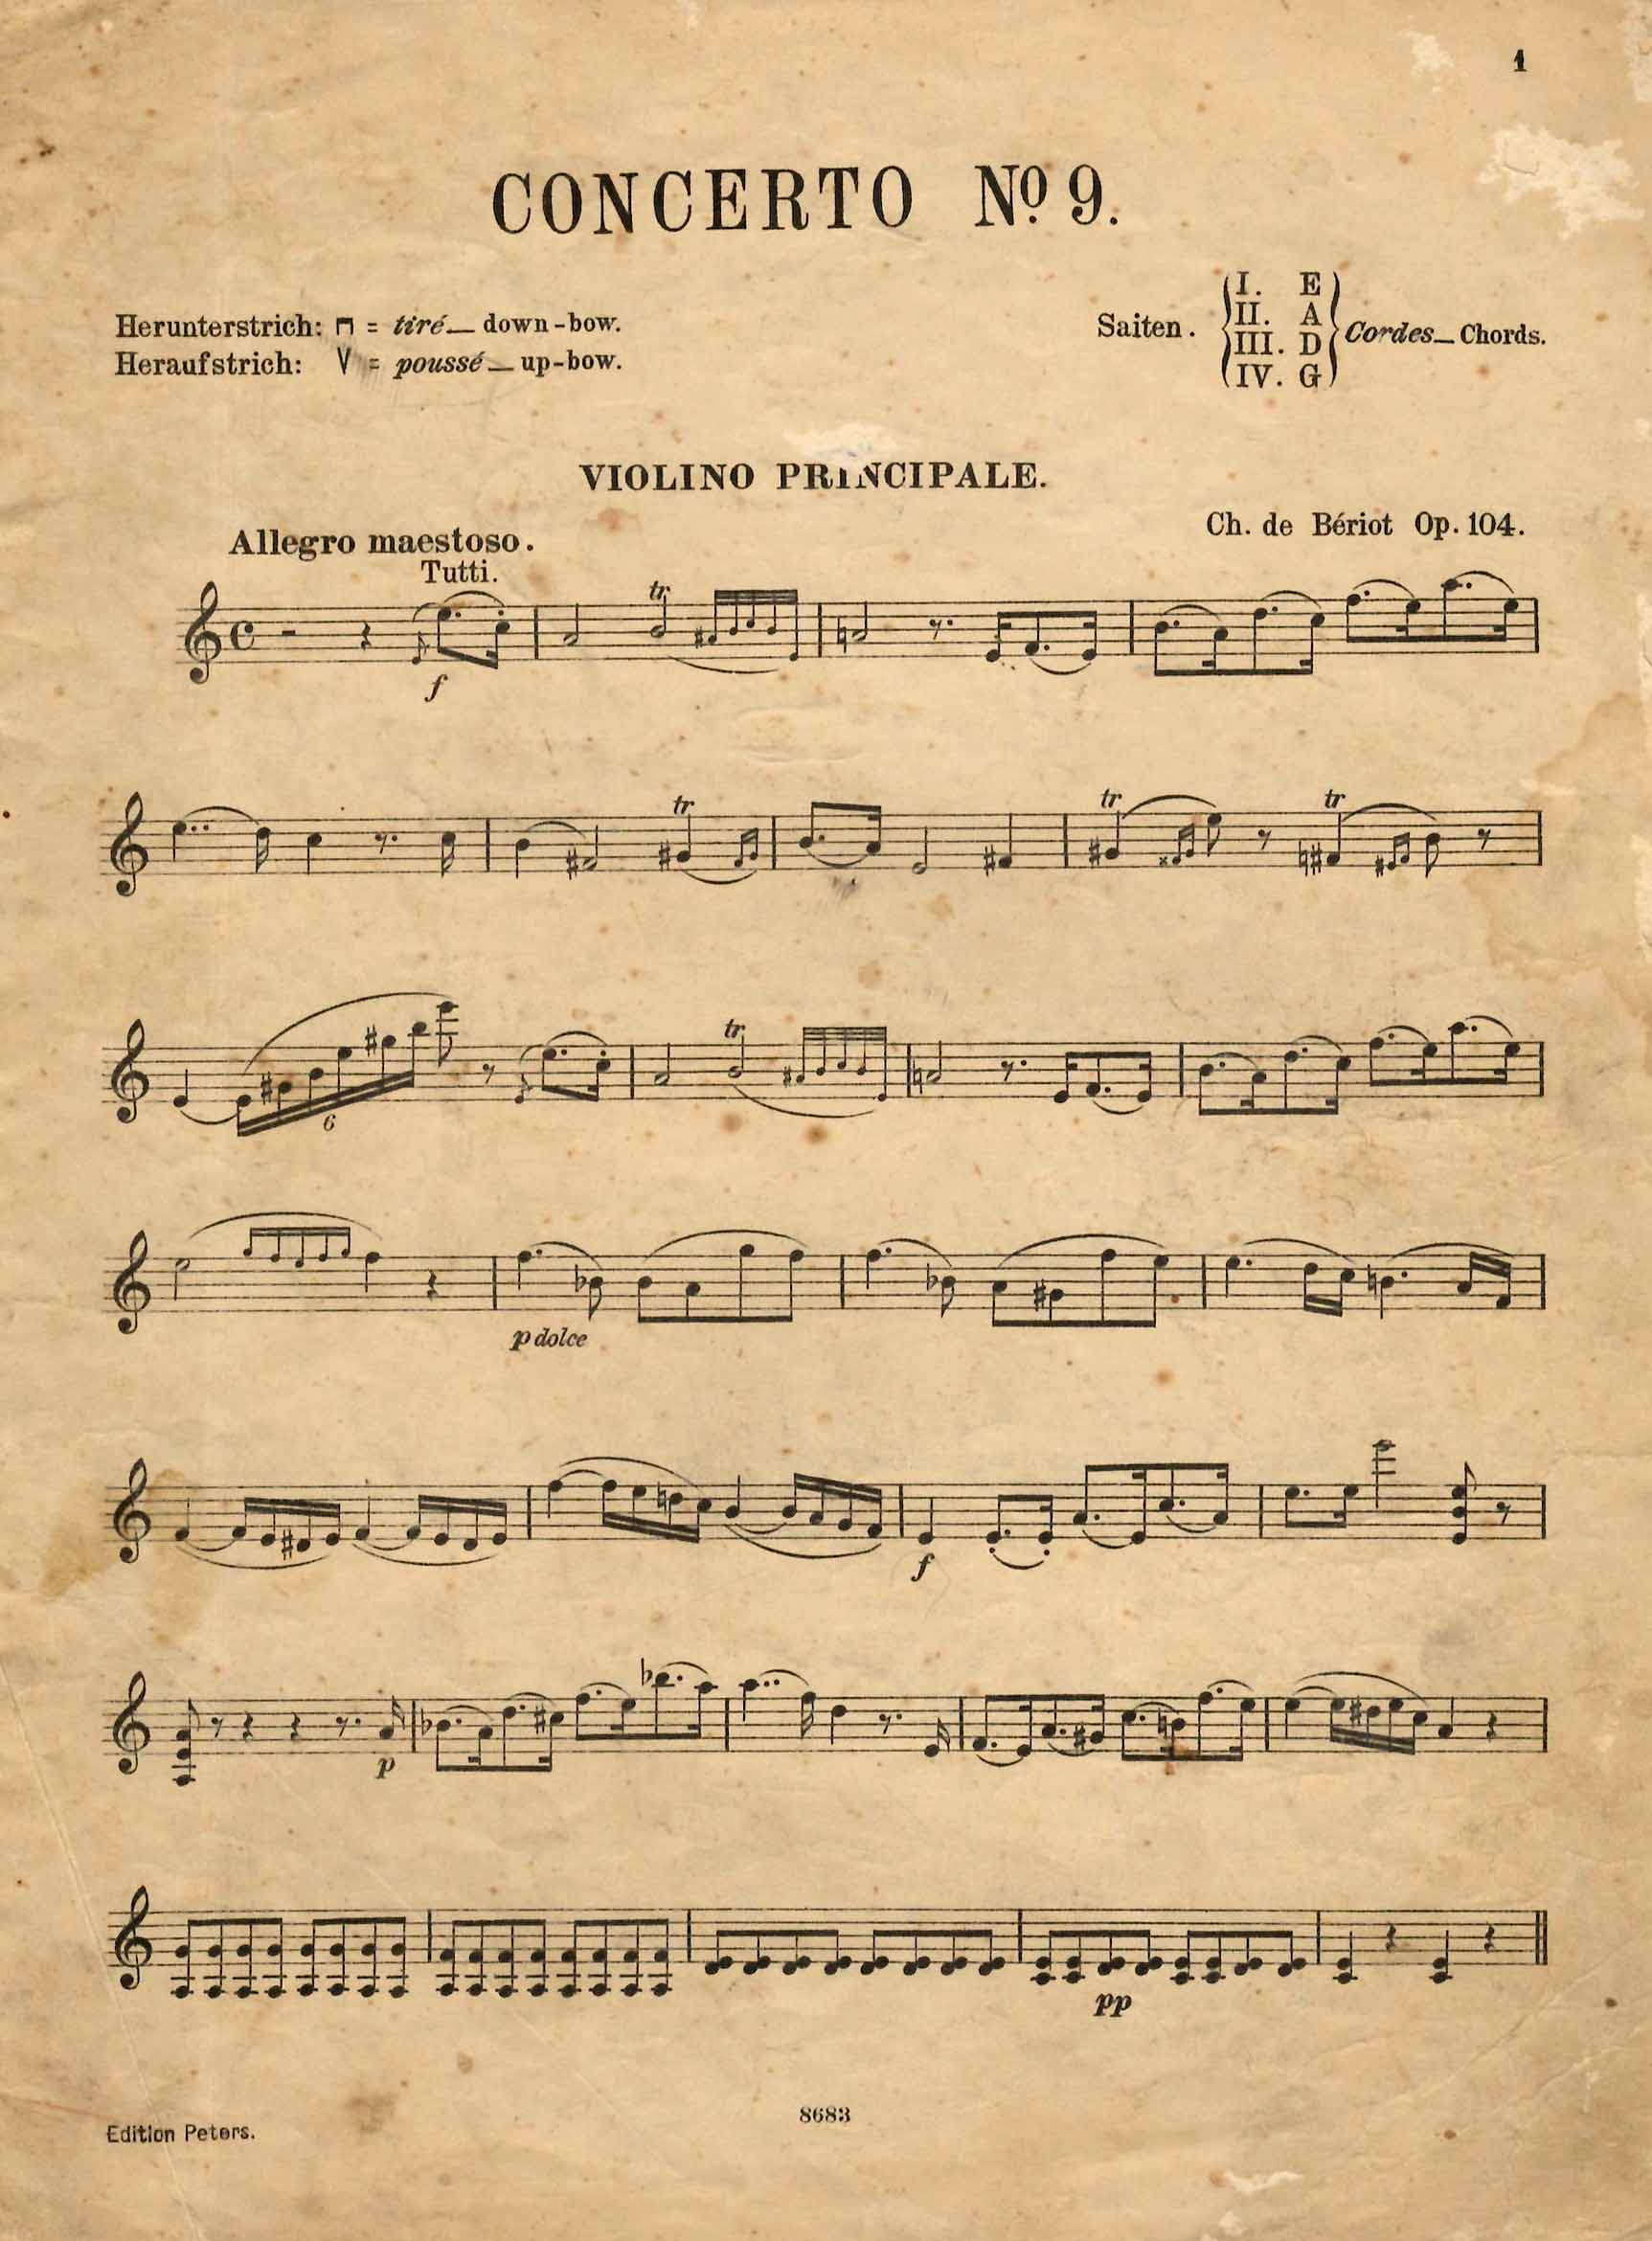 Concerto n. 9, op. 104